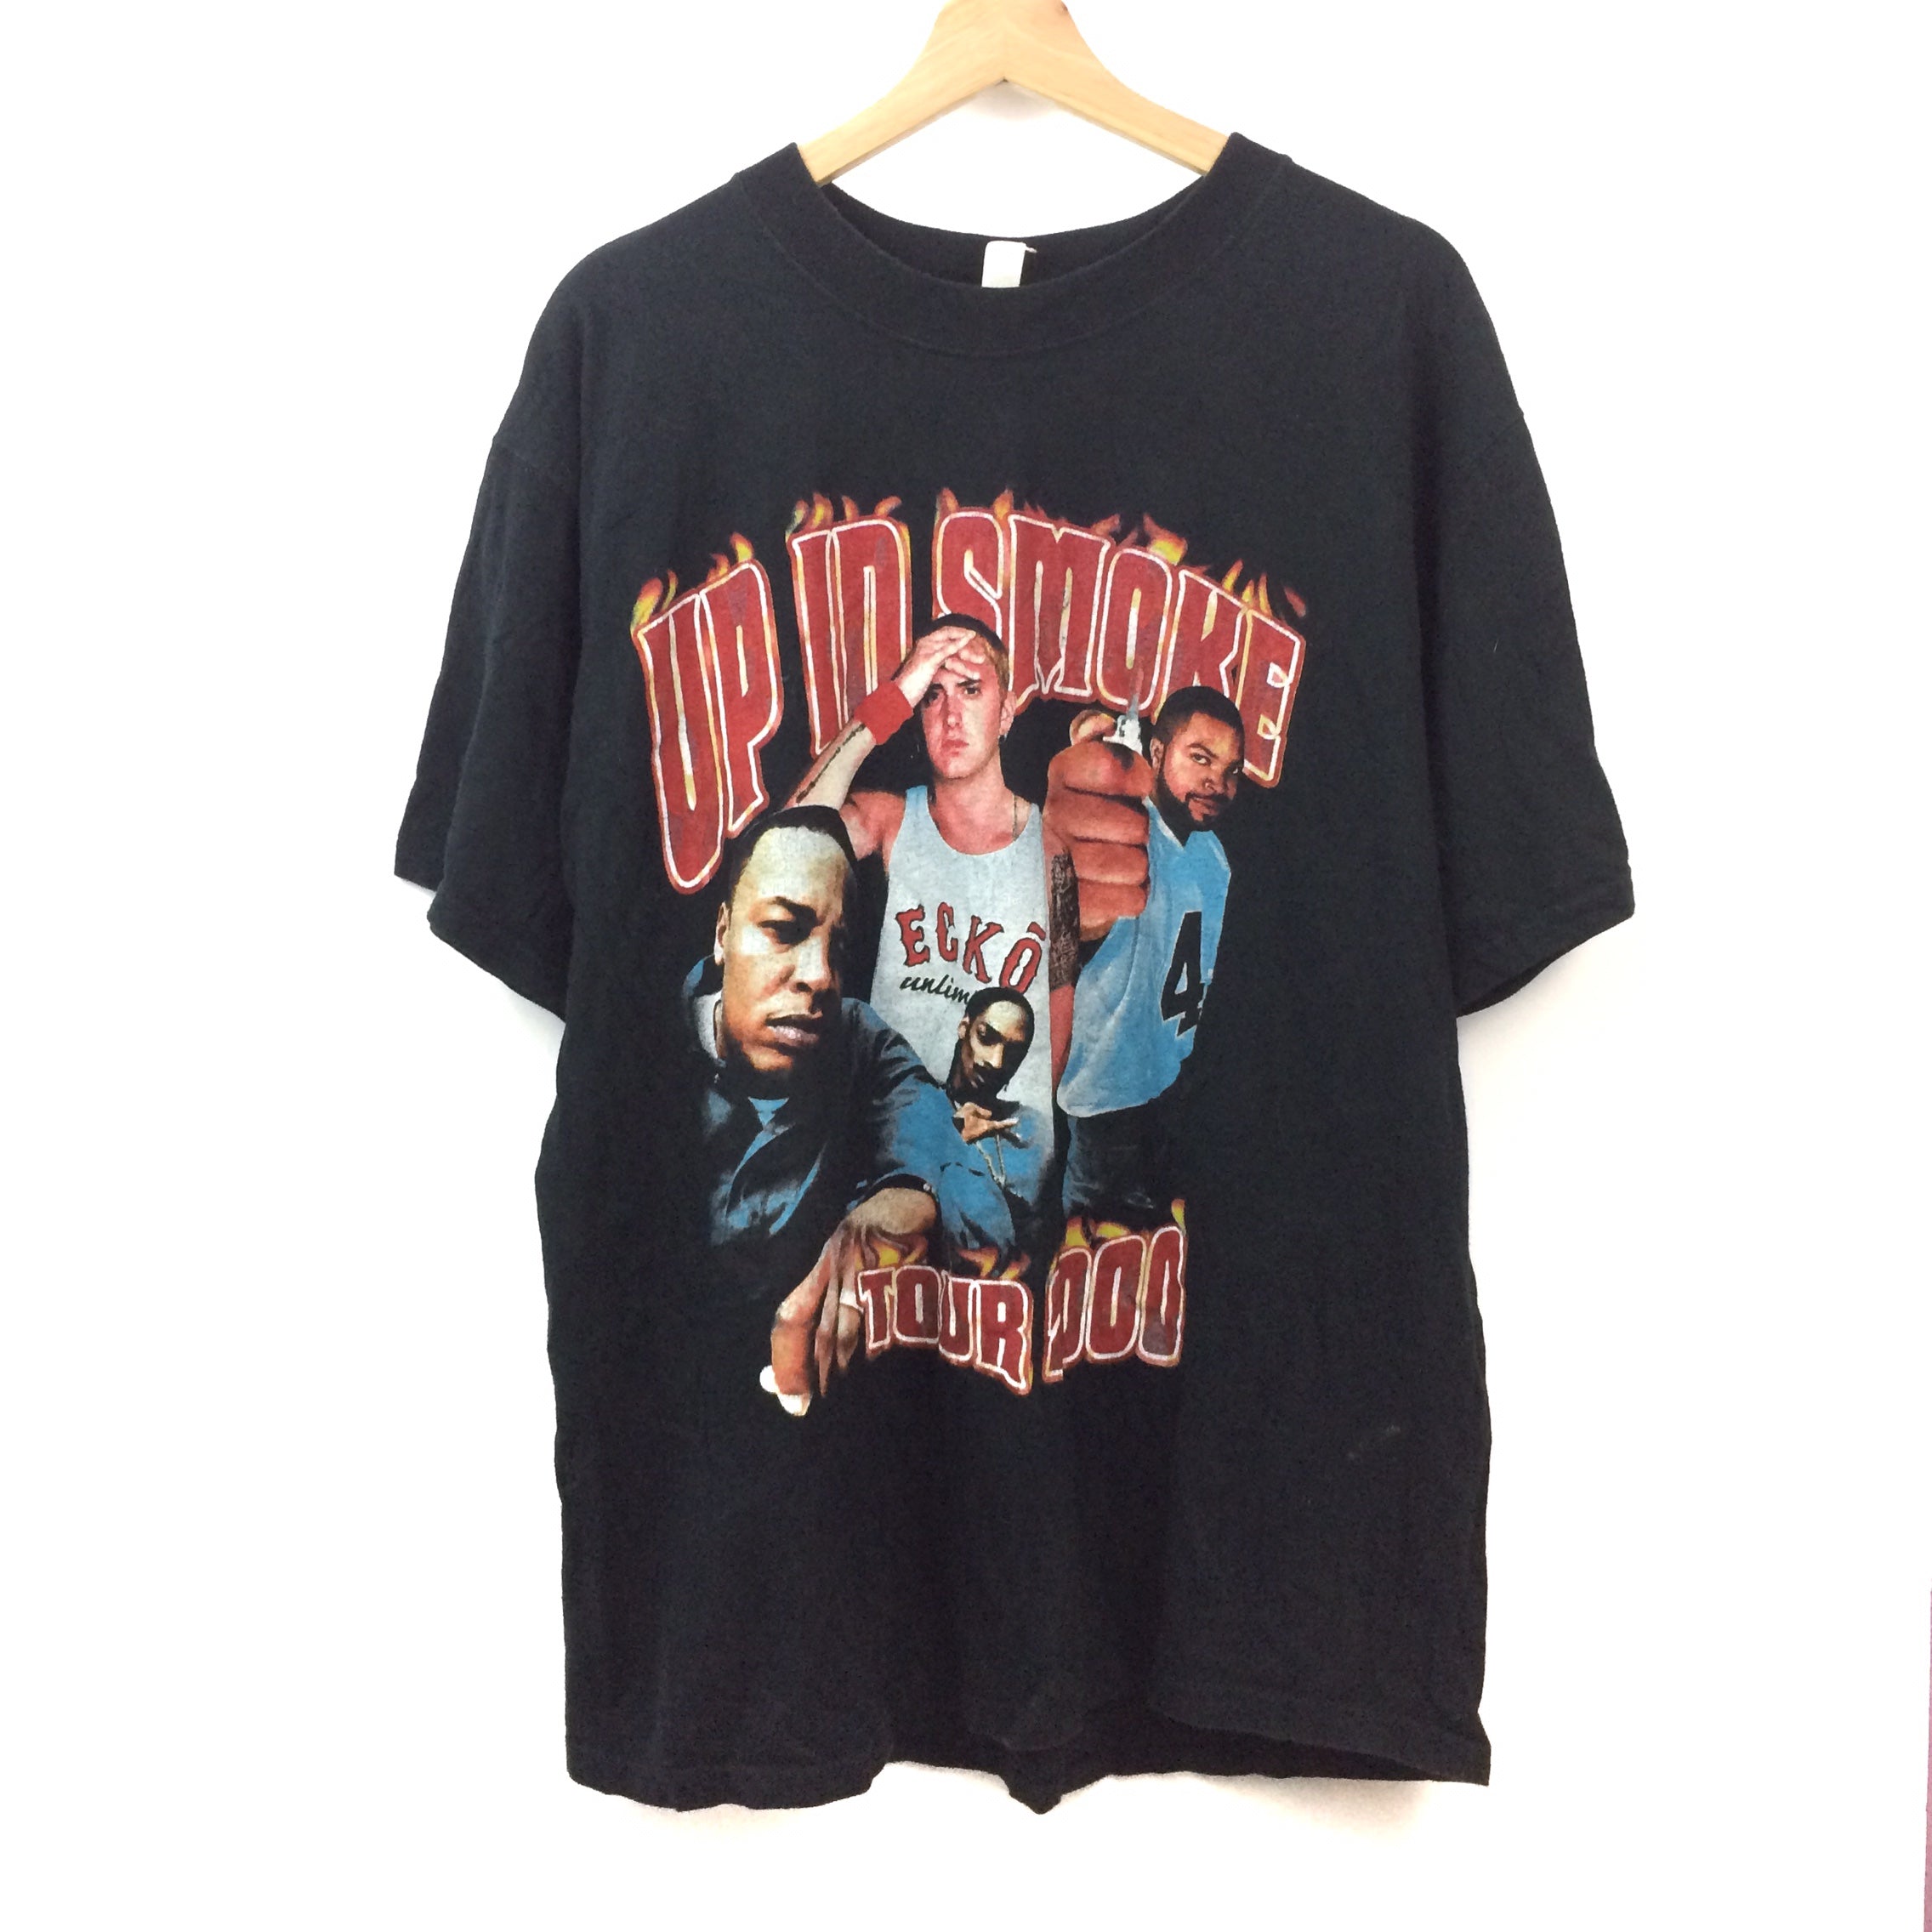 Up In Smoke Tour 2000 T-Shirt Black - Vintage Rap Wear